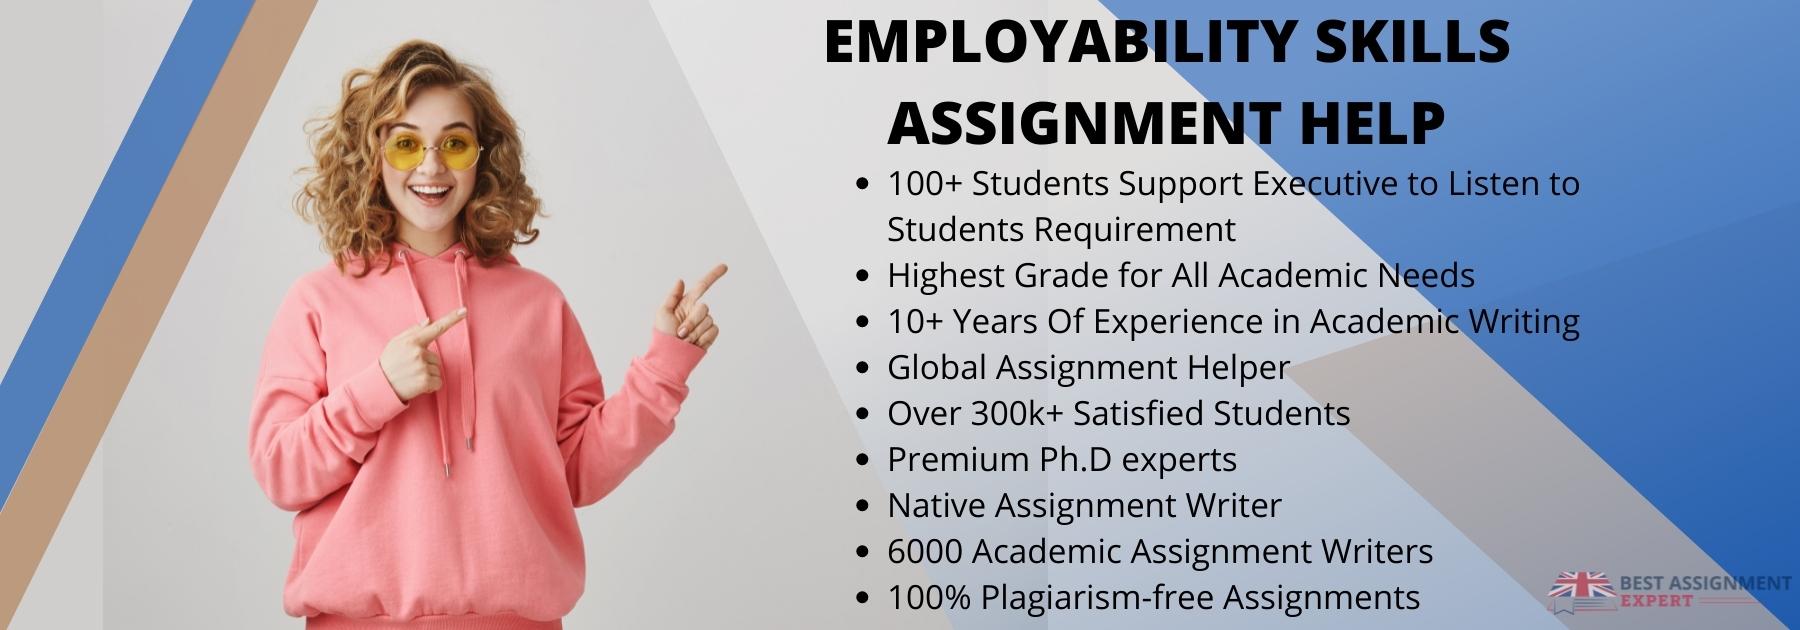 Employability Skills Assignment Help